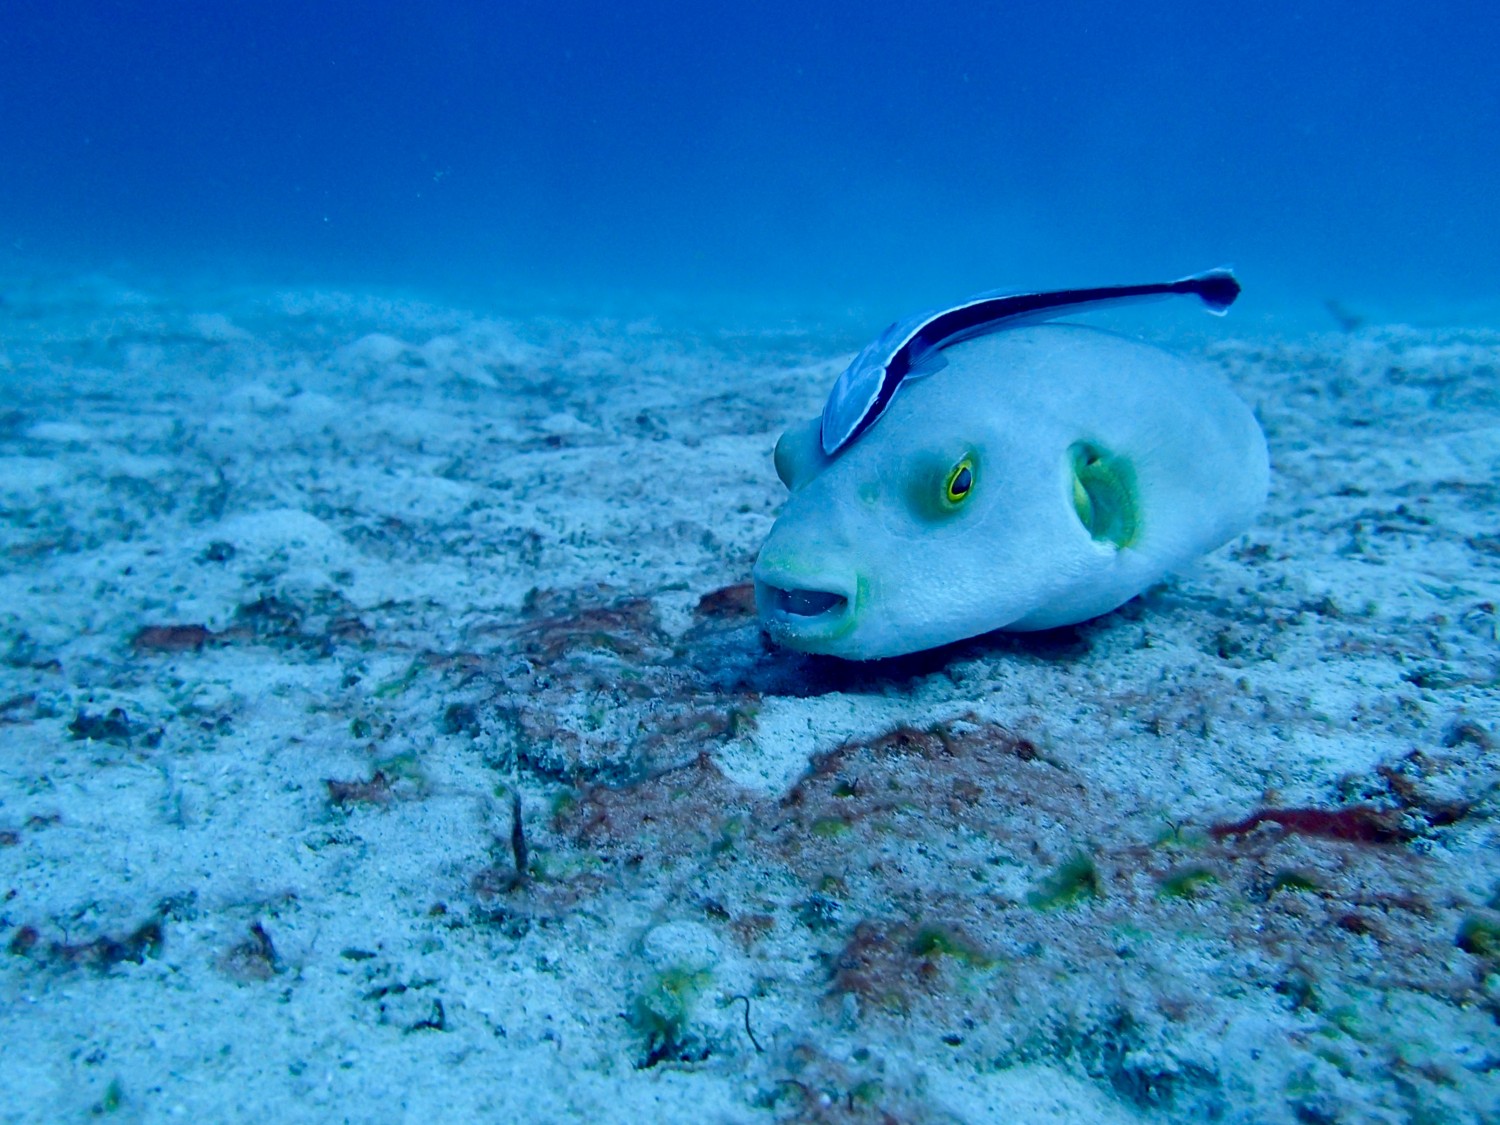 Immaculate pufferfish - der lige får sig en tur af rensefisken:) 